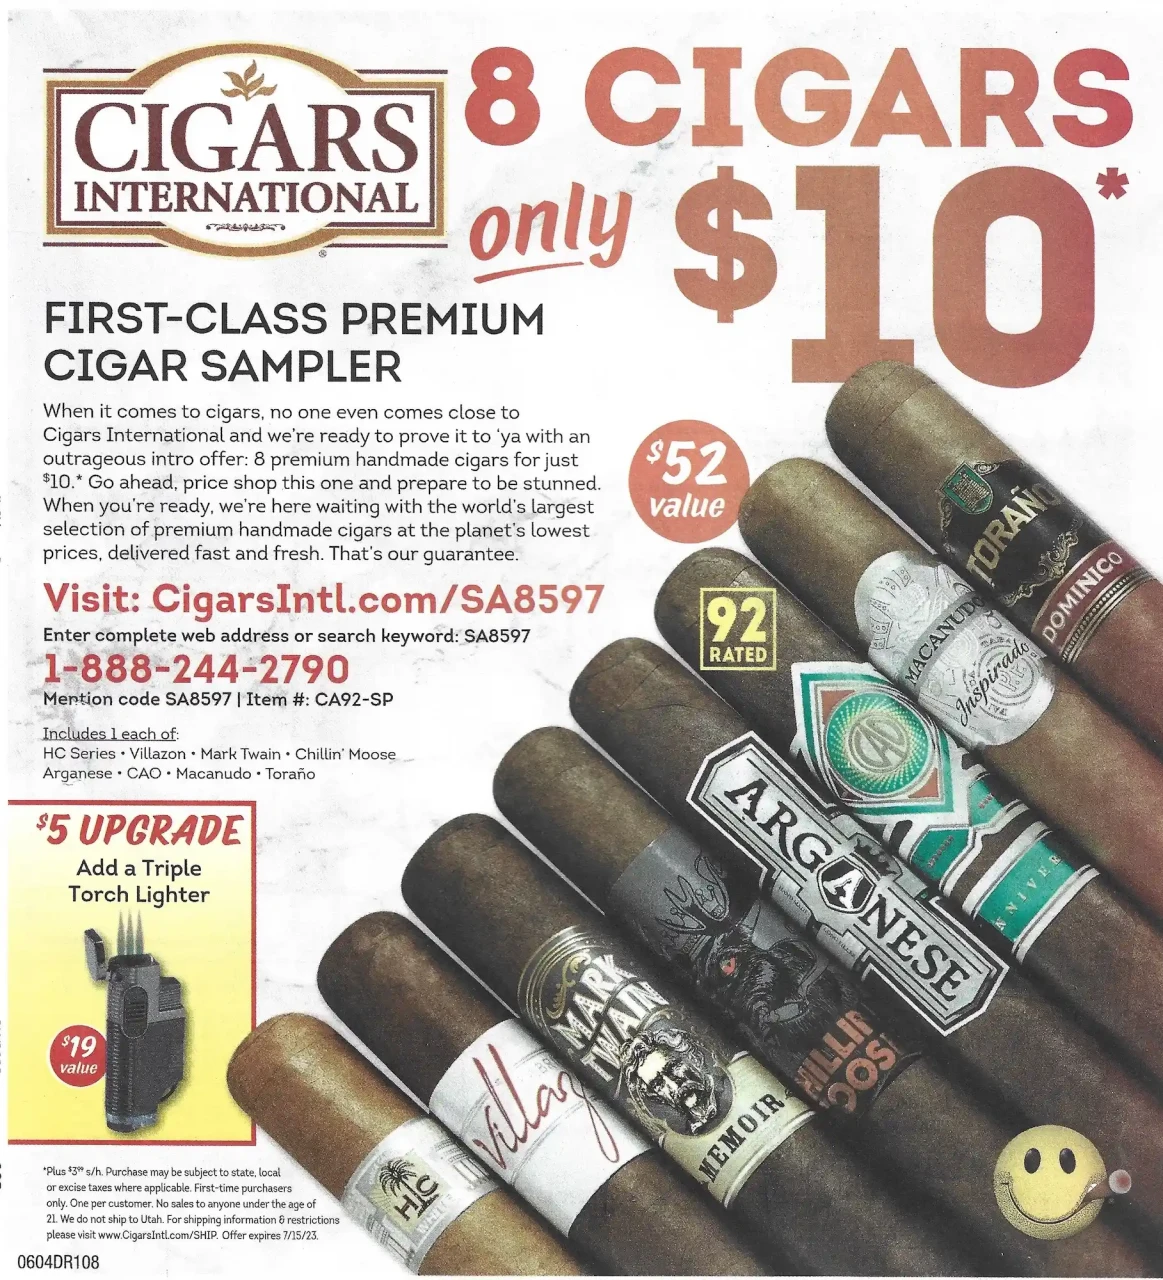 Cigars International Promo Code: 8 Cigars $10 Expires - 07/15/2023